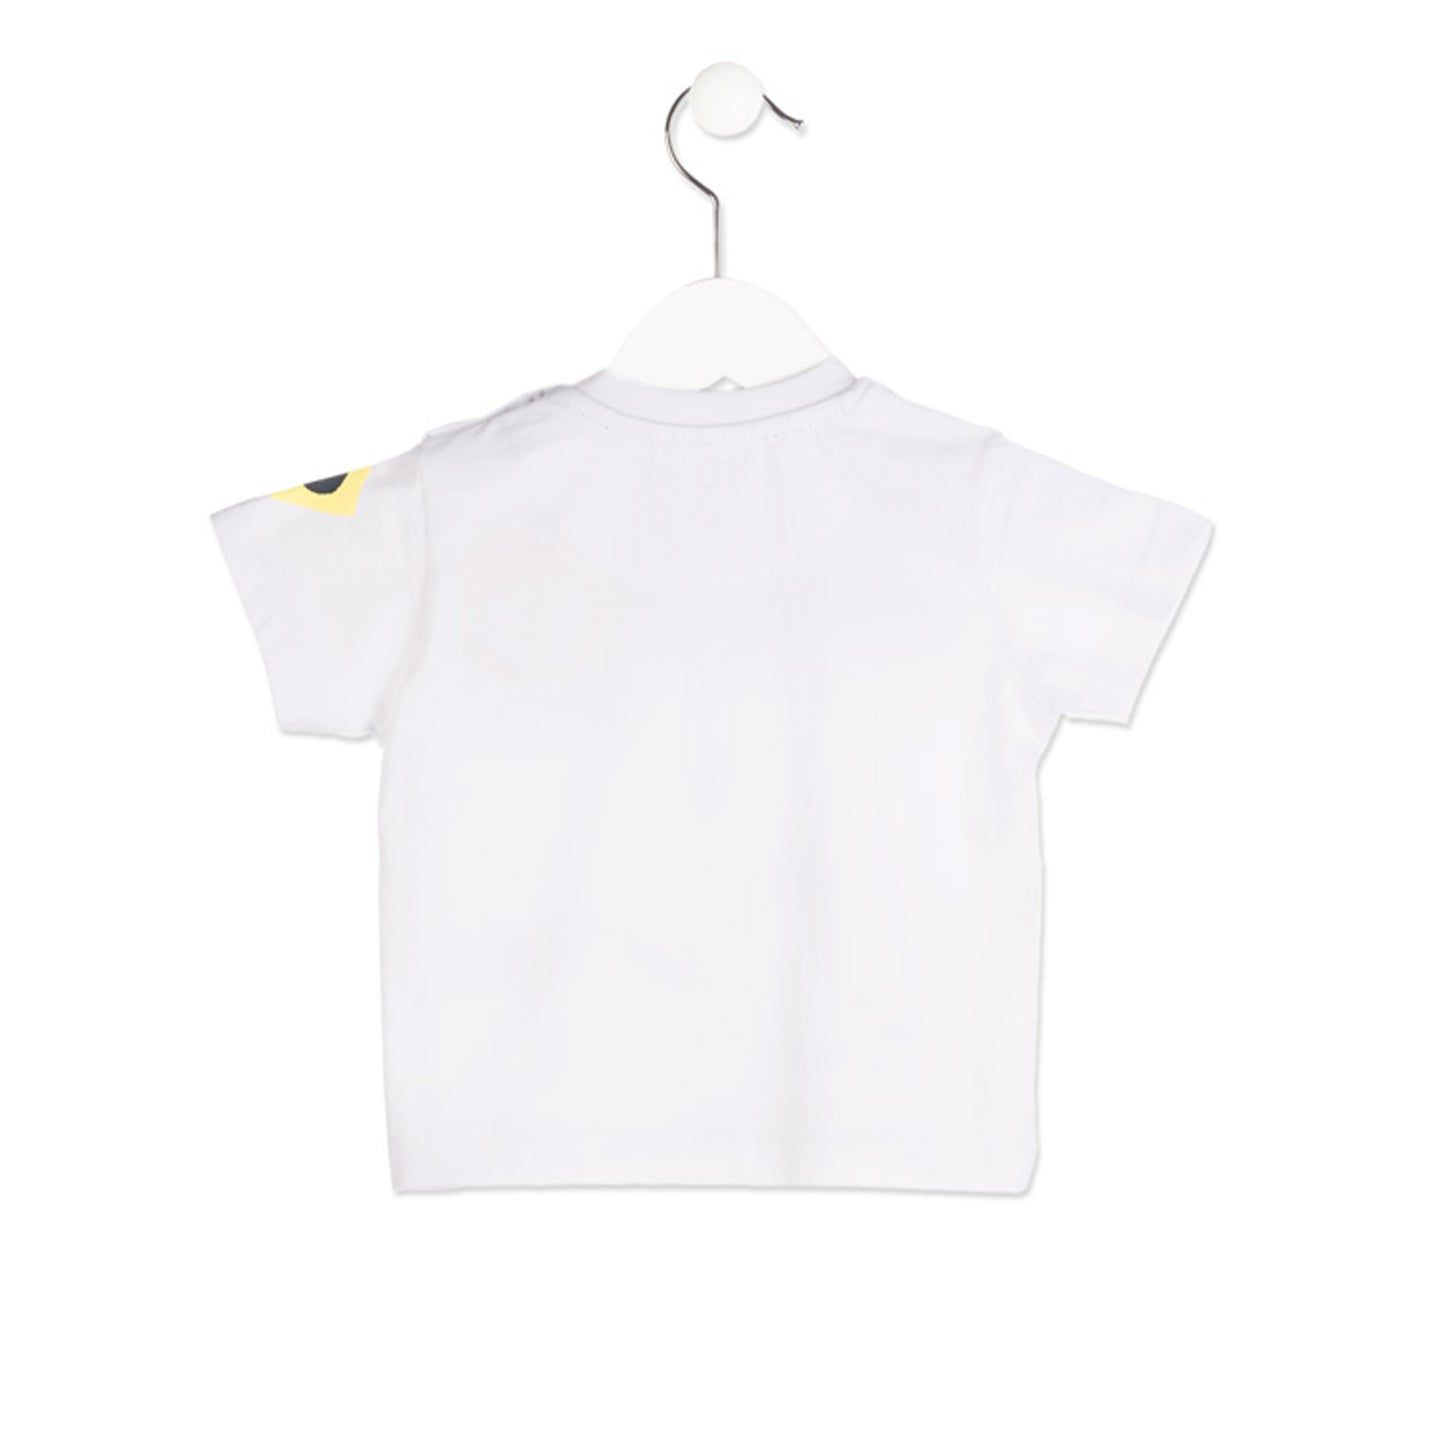 Losan - T-Shirt Dettagli Marinari Baby Bimbo